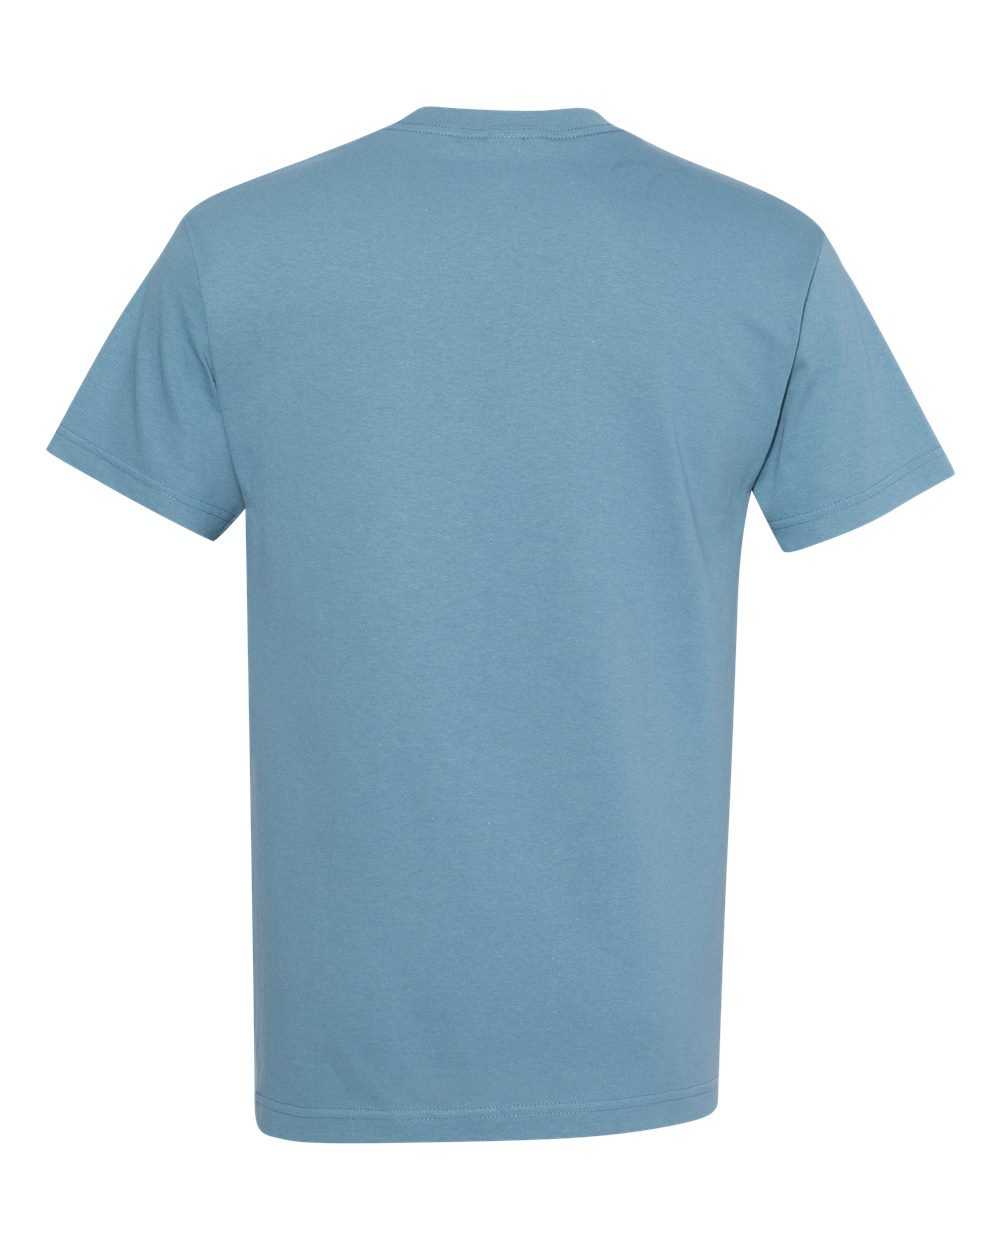 American Apparel 1301 Unisex Heavyweight Cotton T-Shirt - Slate - HIT a Double